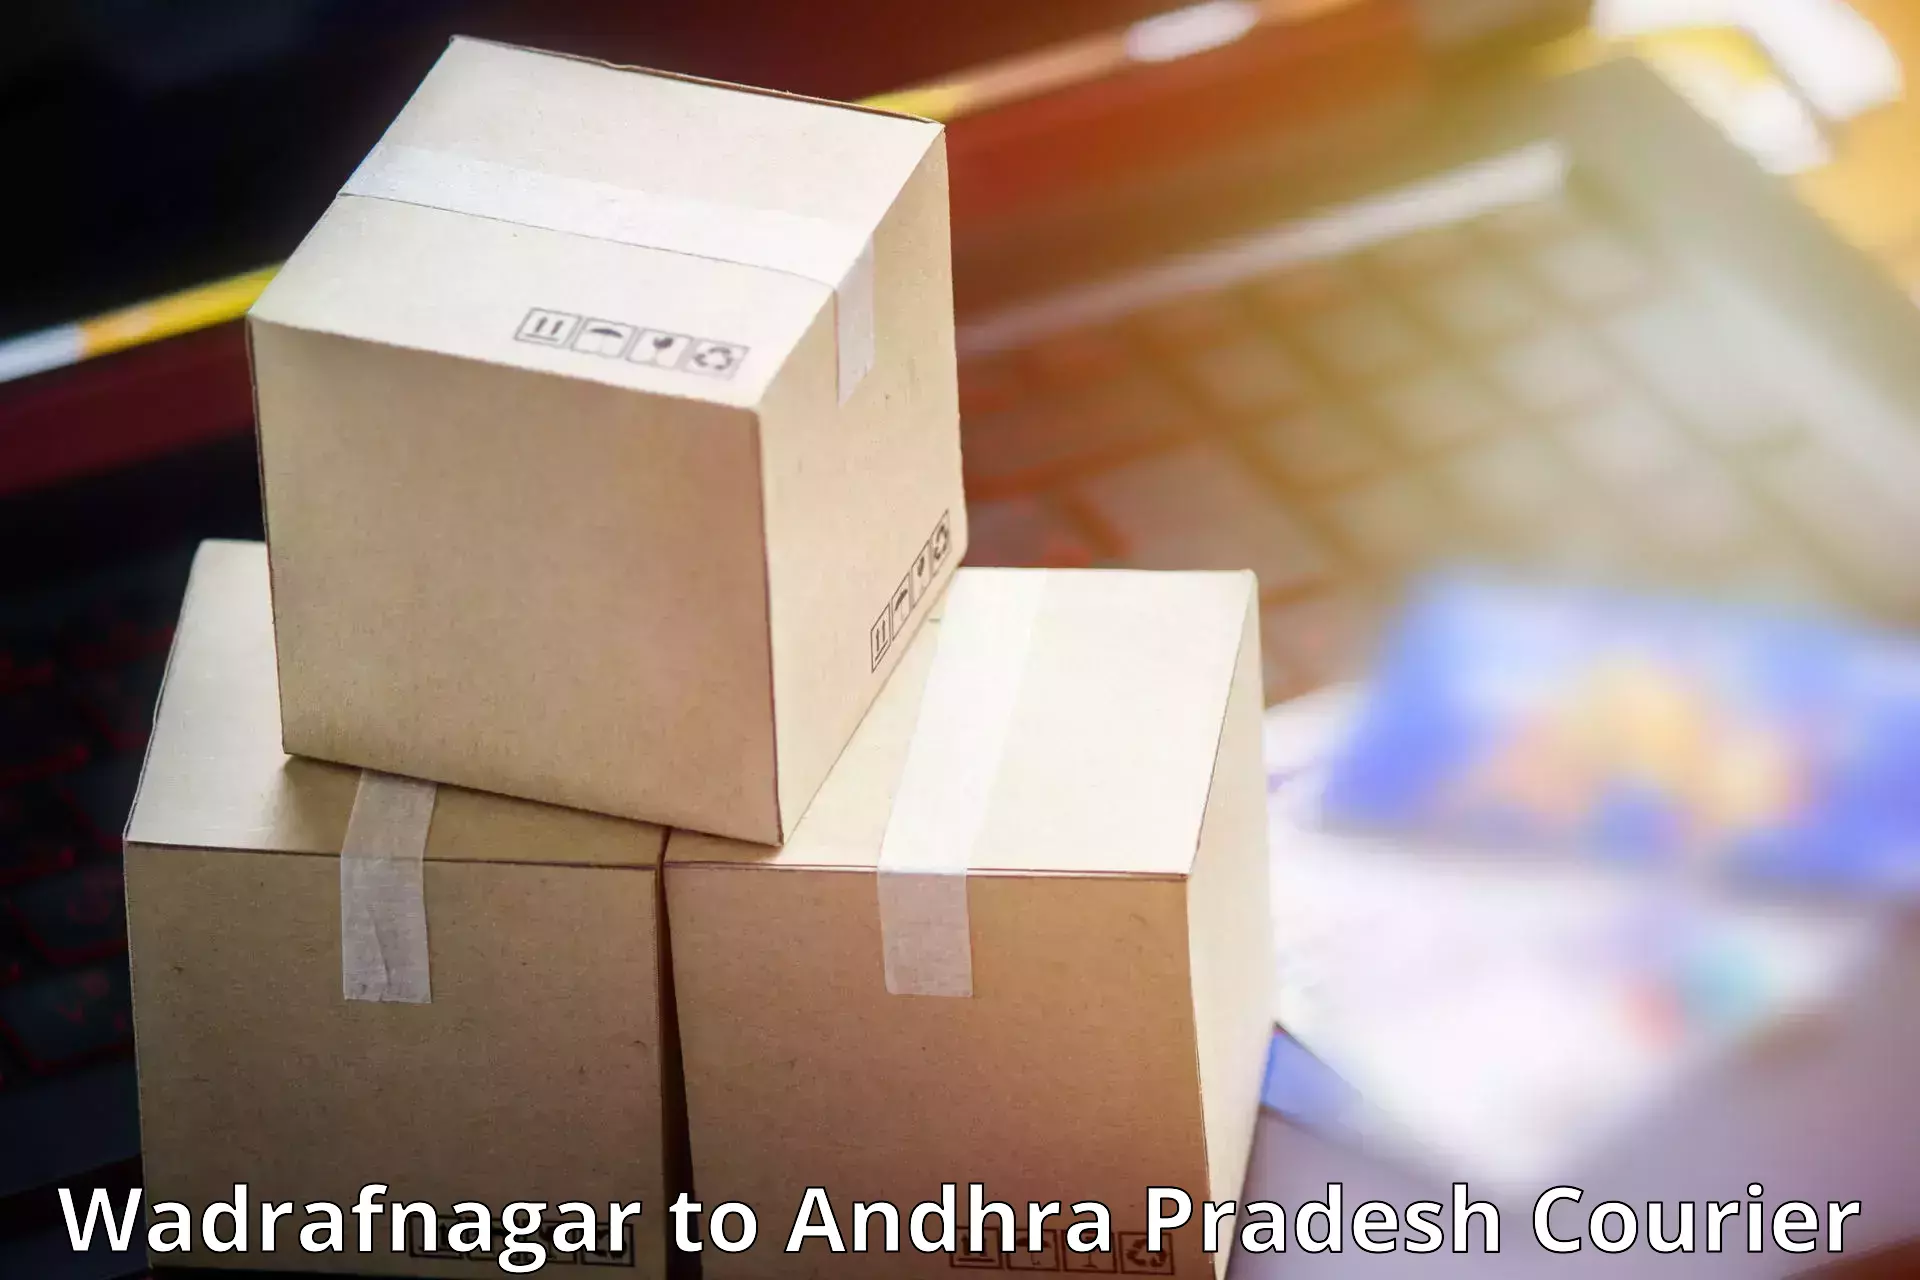 Diverse delivery methods Wadrafnagar to Rajayyapeta